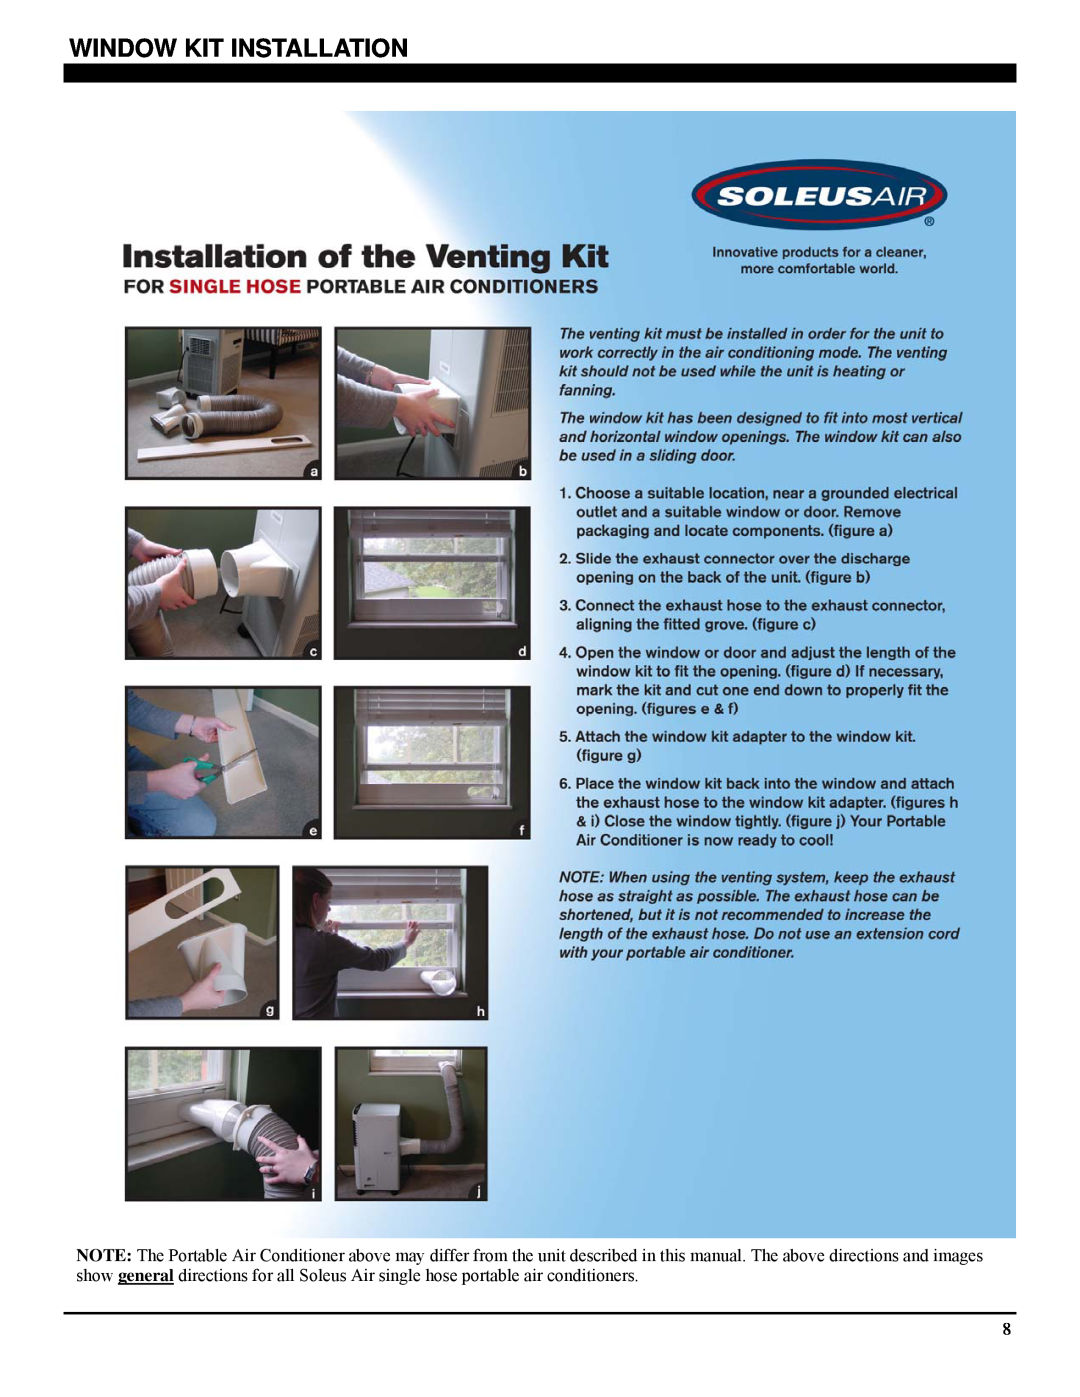 Soleus Air PE6-10R-03 manual Window Kit Installation 